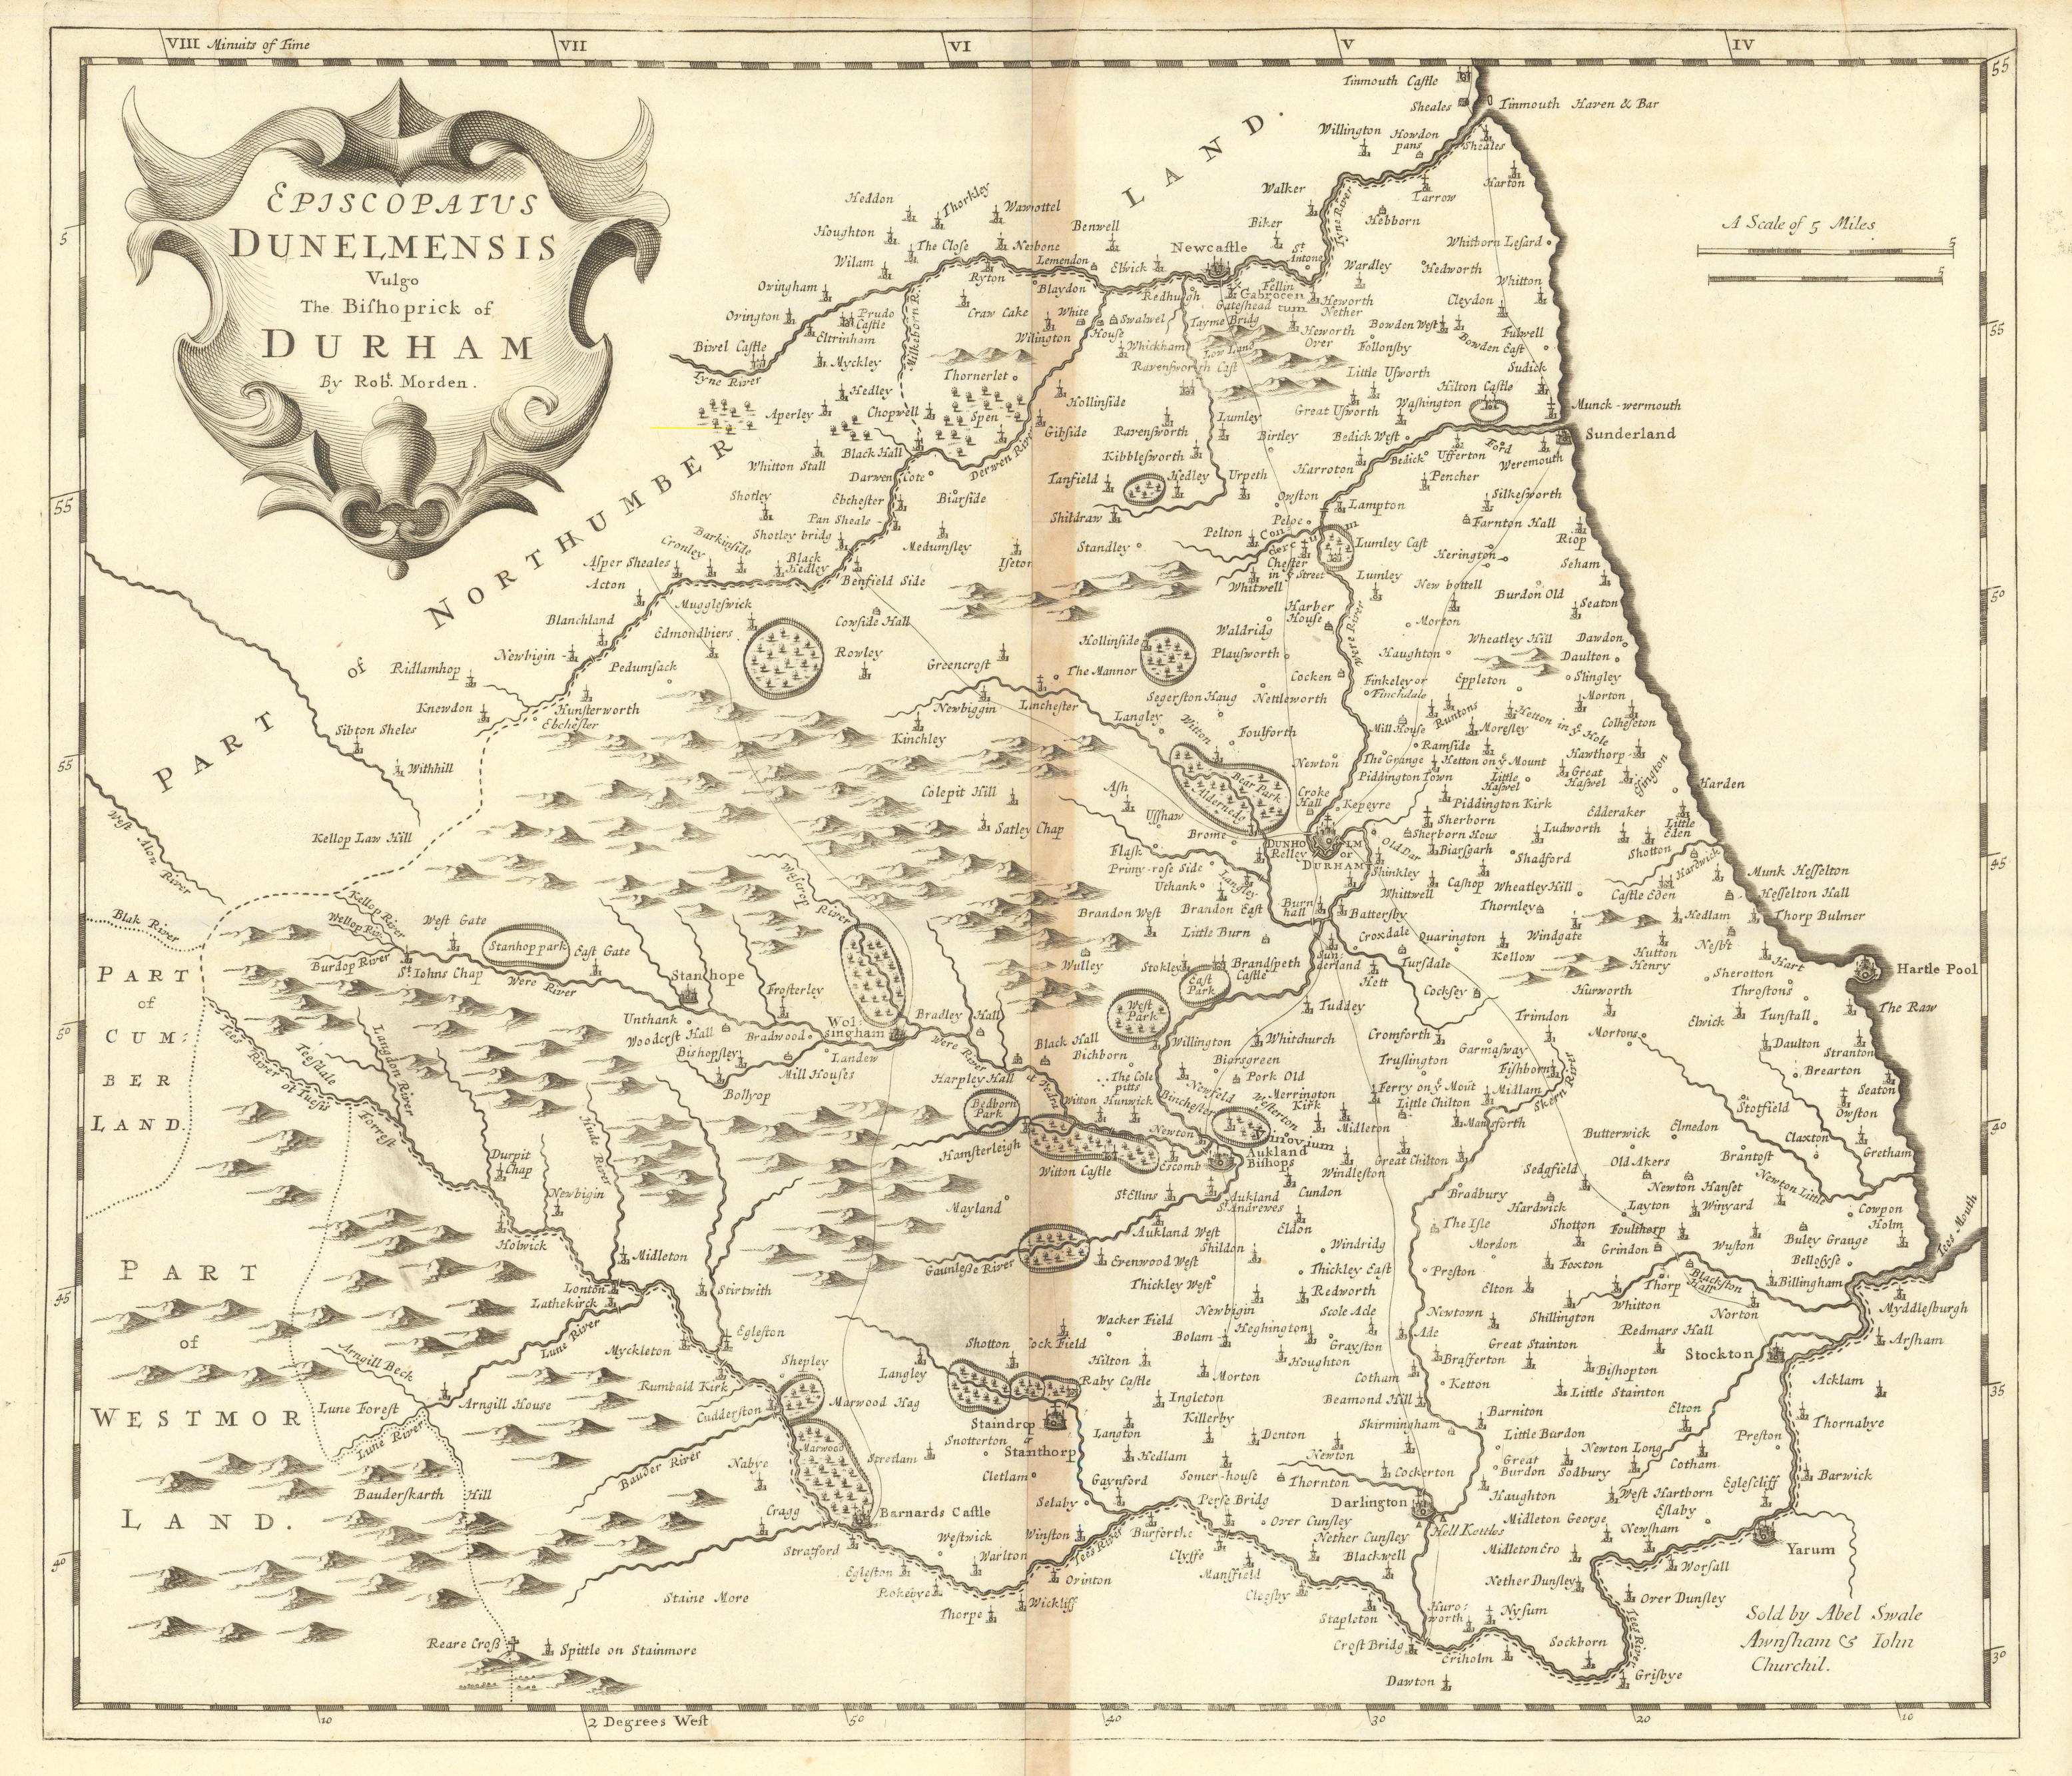 Associate Product Bishopric of Durham. 'EPISCOPAIUS DUNELMENSIS' by ROBERT MORDEN 1695 old map